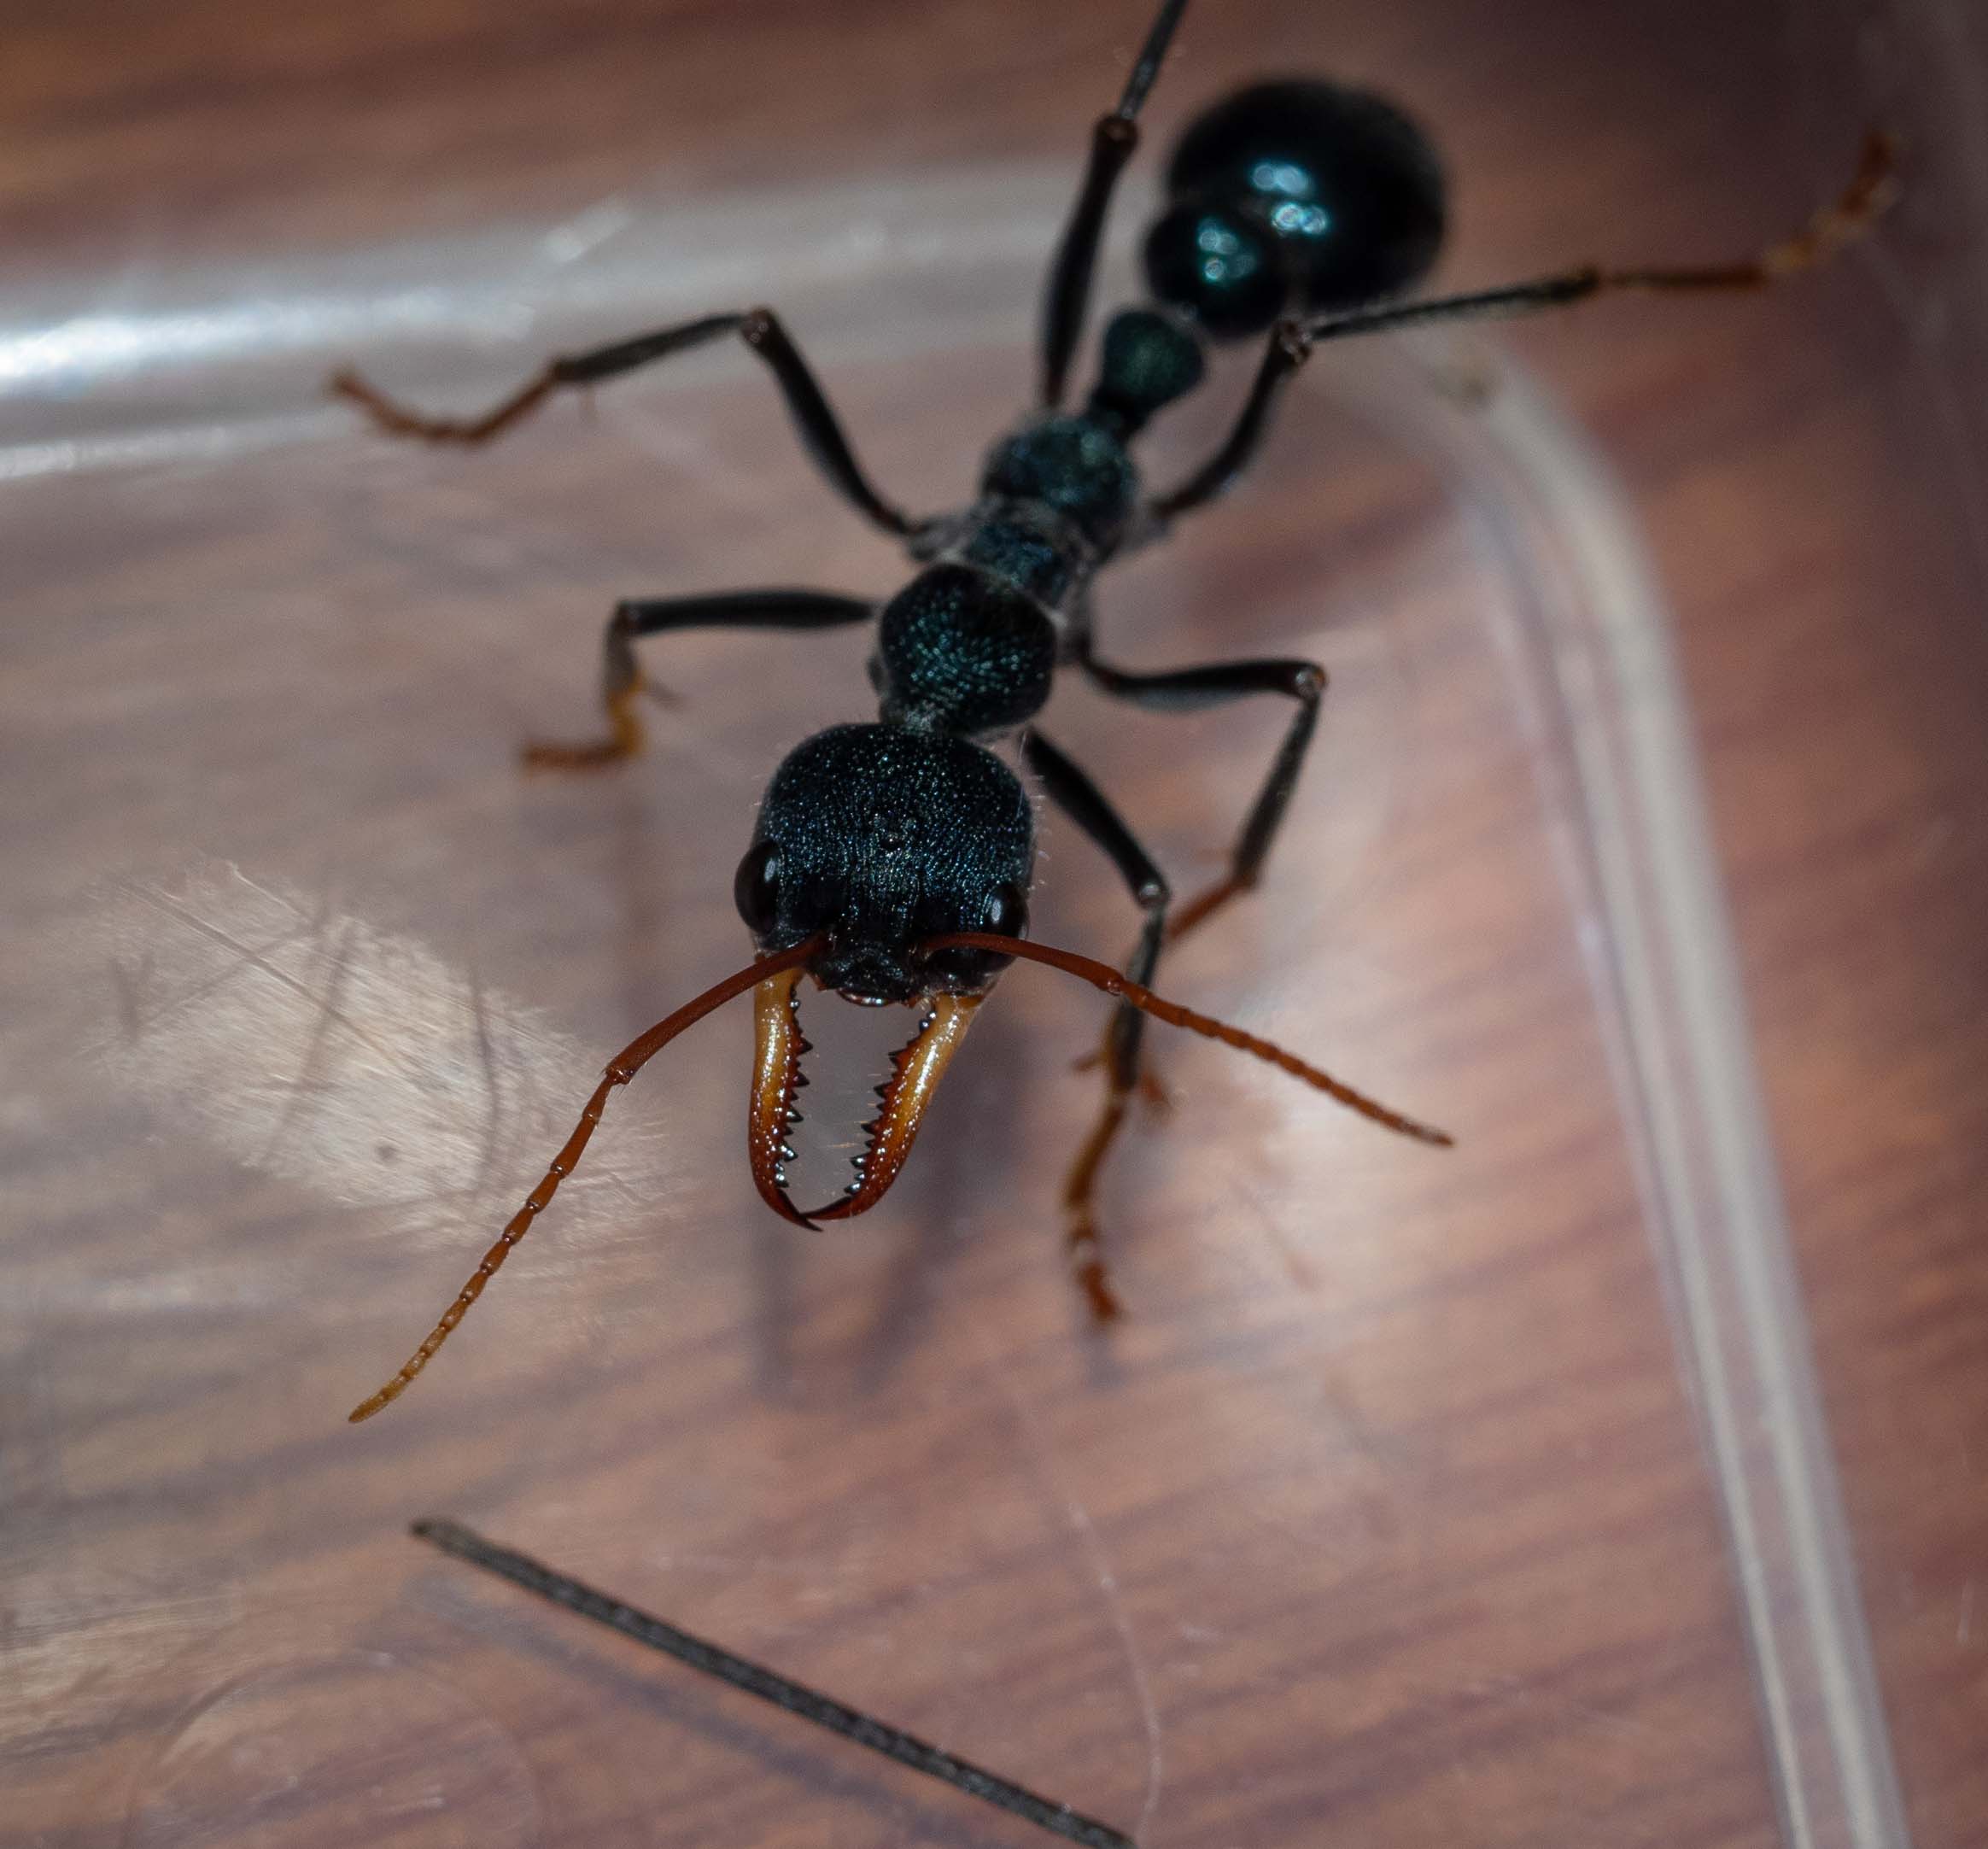 bull ant (Order: Hymenoptera)